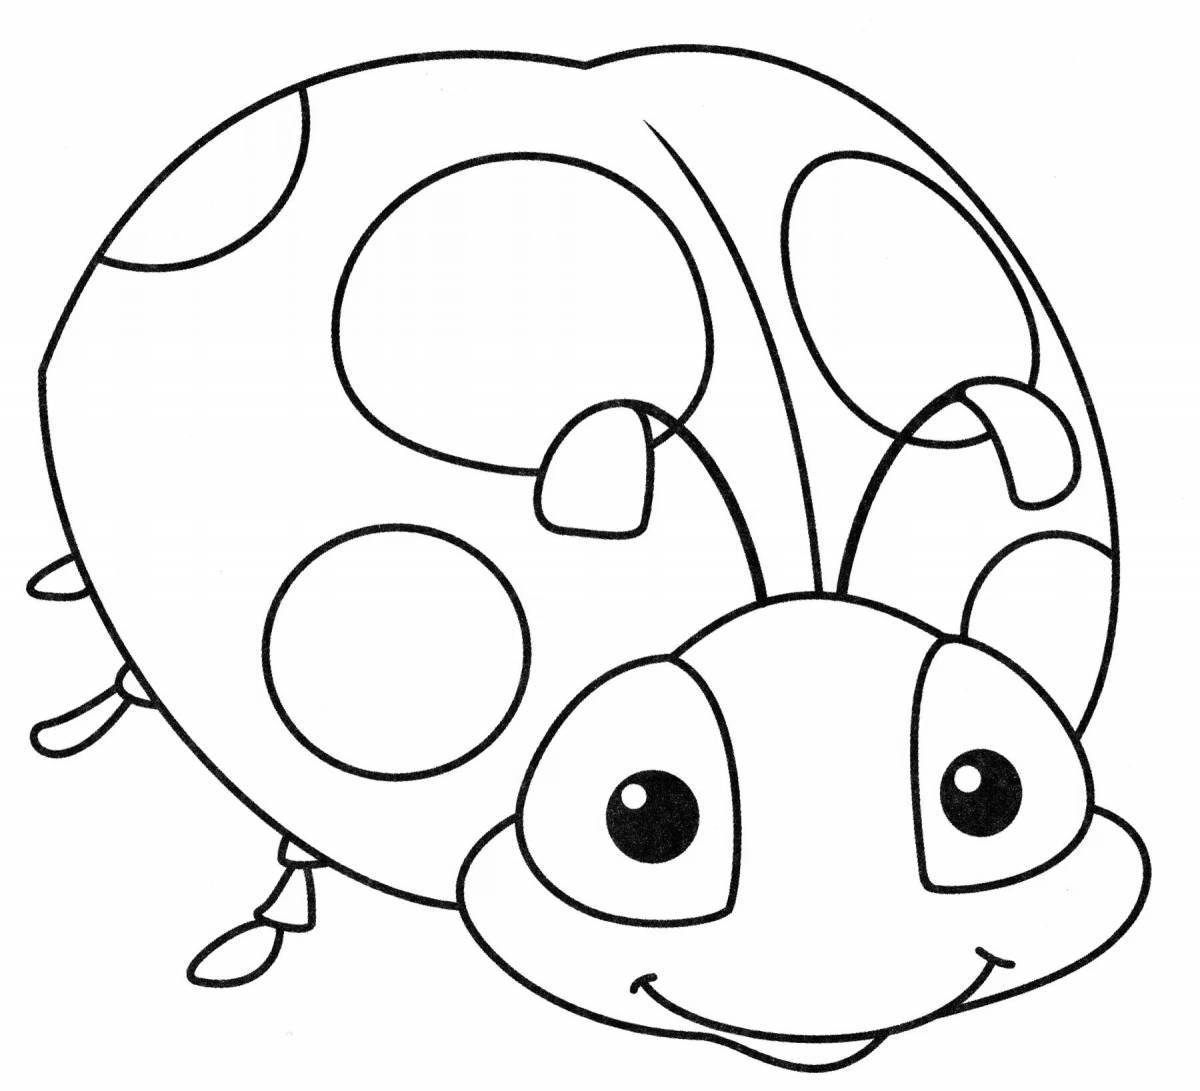 Joyful ladybug coloring book for kids